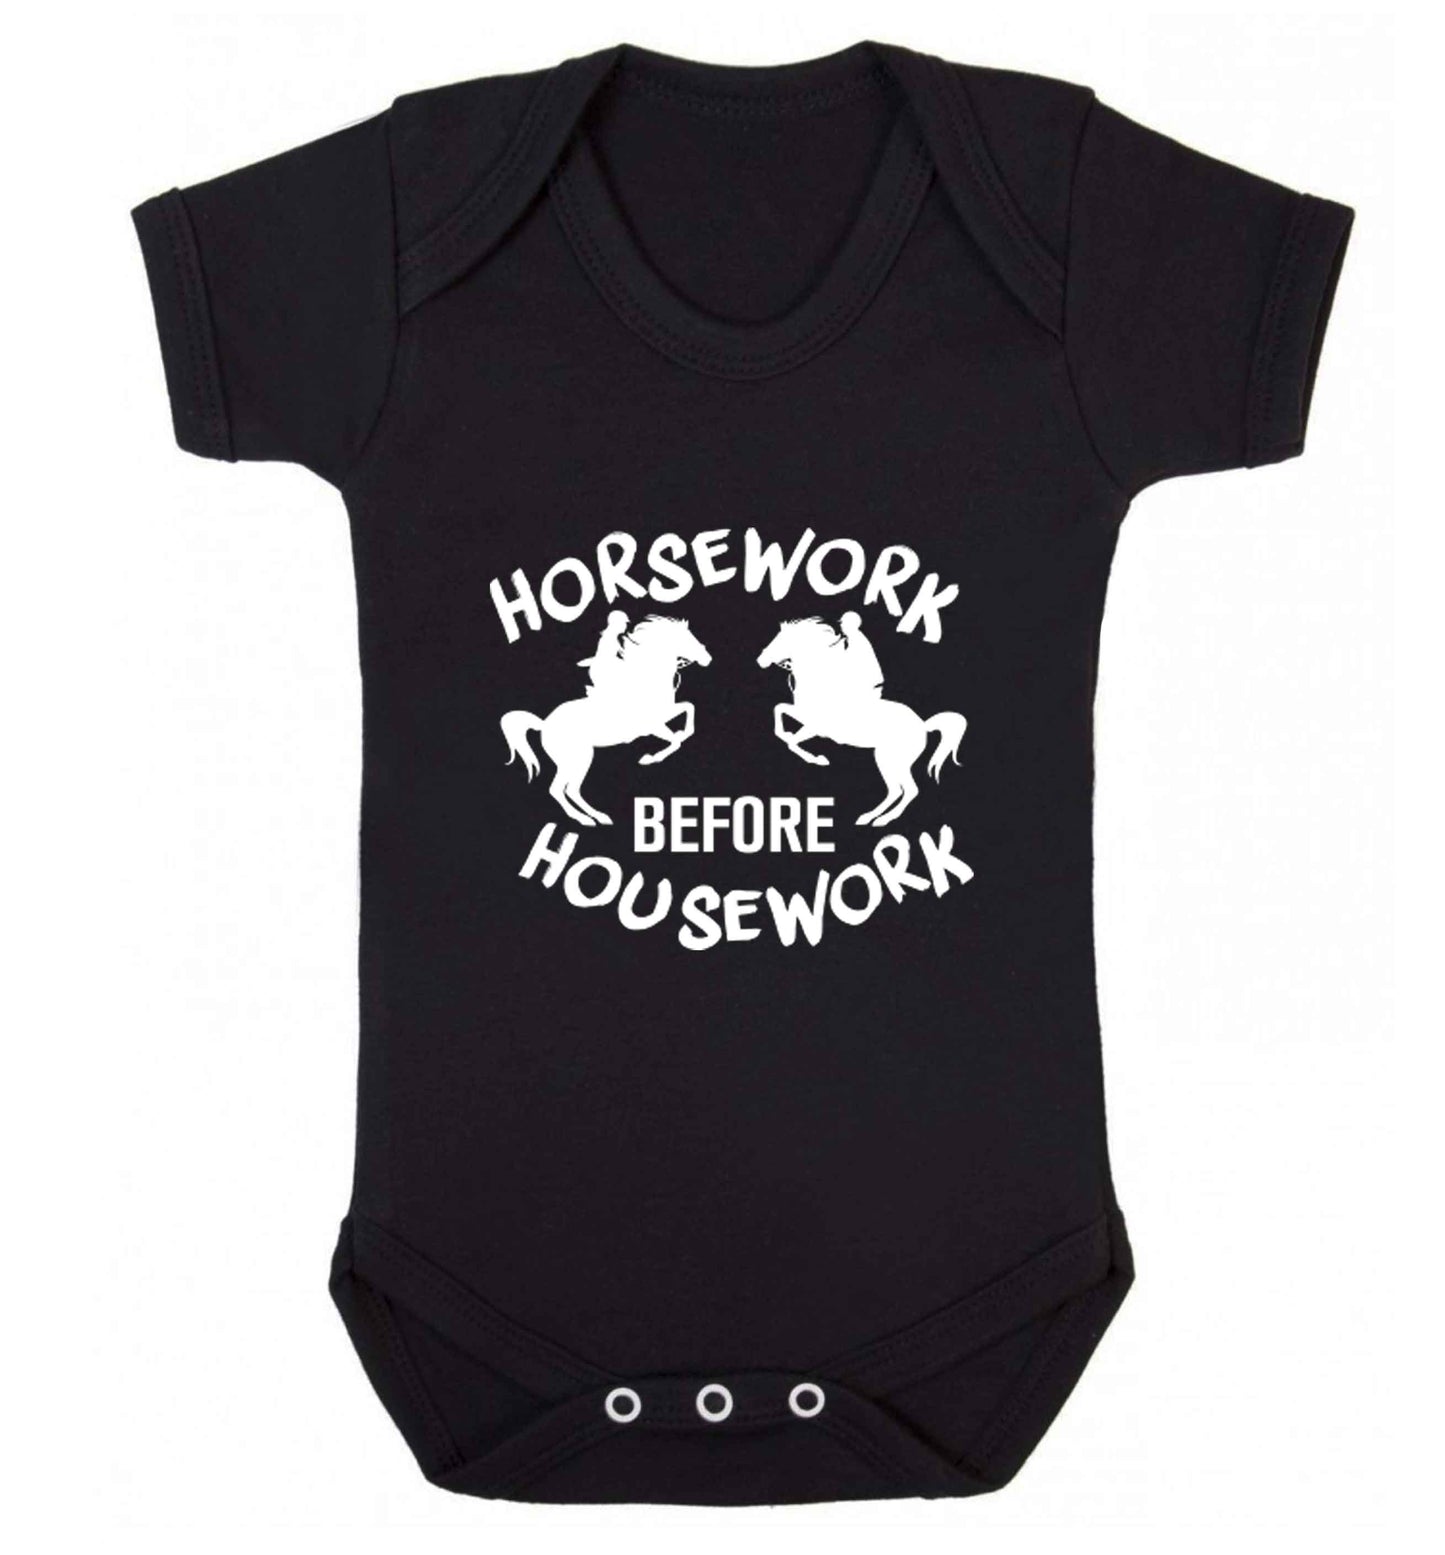 Horsework before housework baby vest black 18-24 months